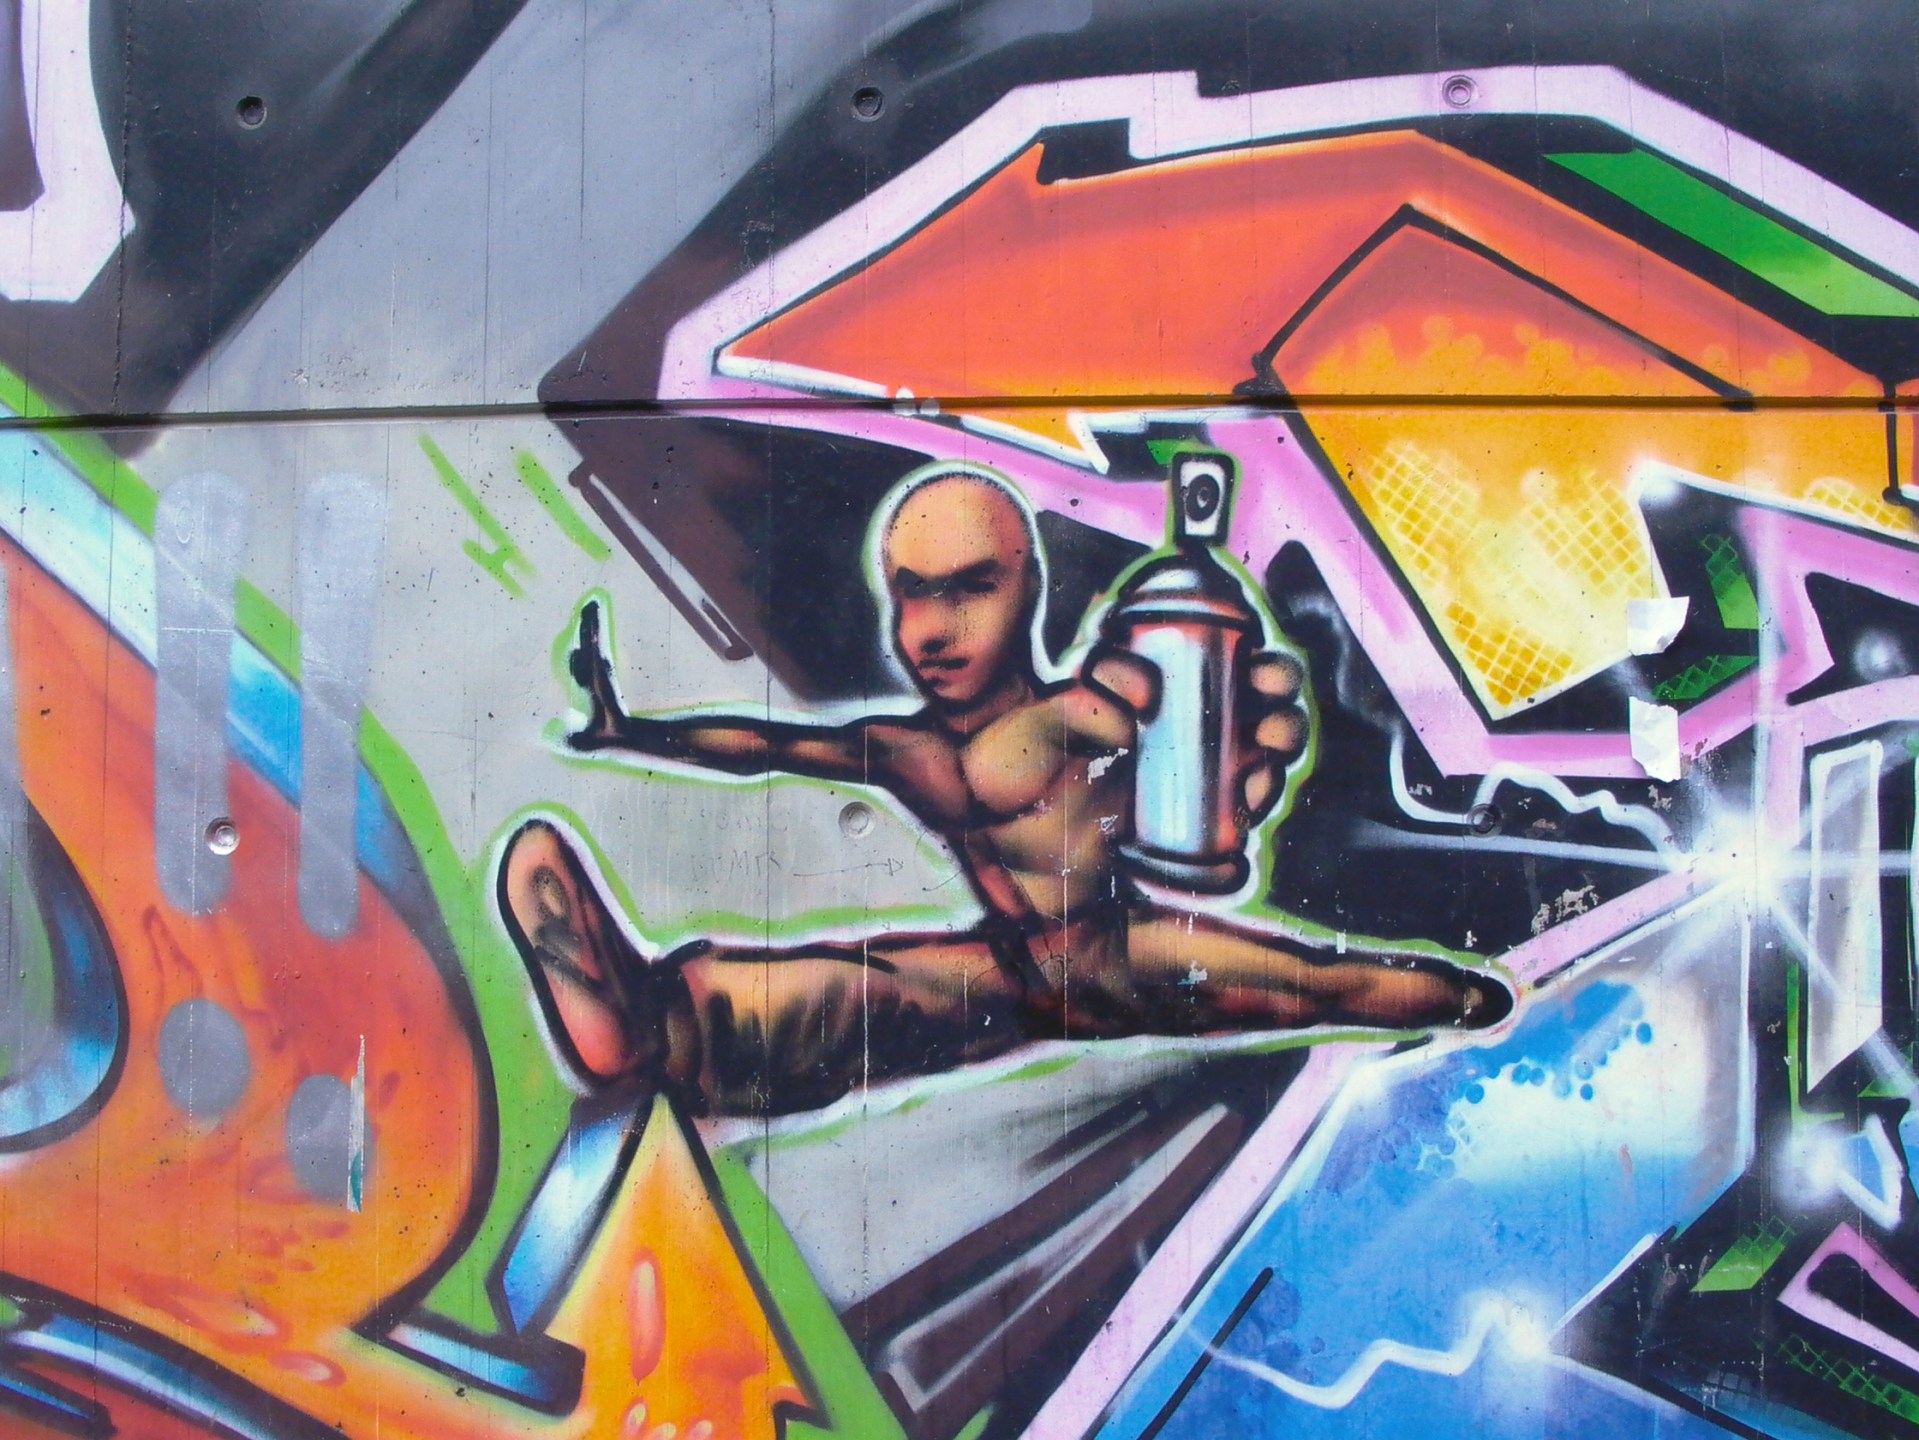 Swiss Street Art Thrives In The Mainstream Swi Swissinfo Ch